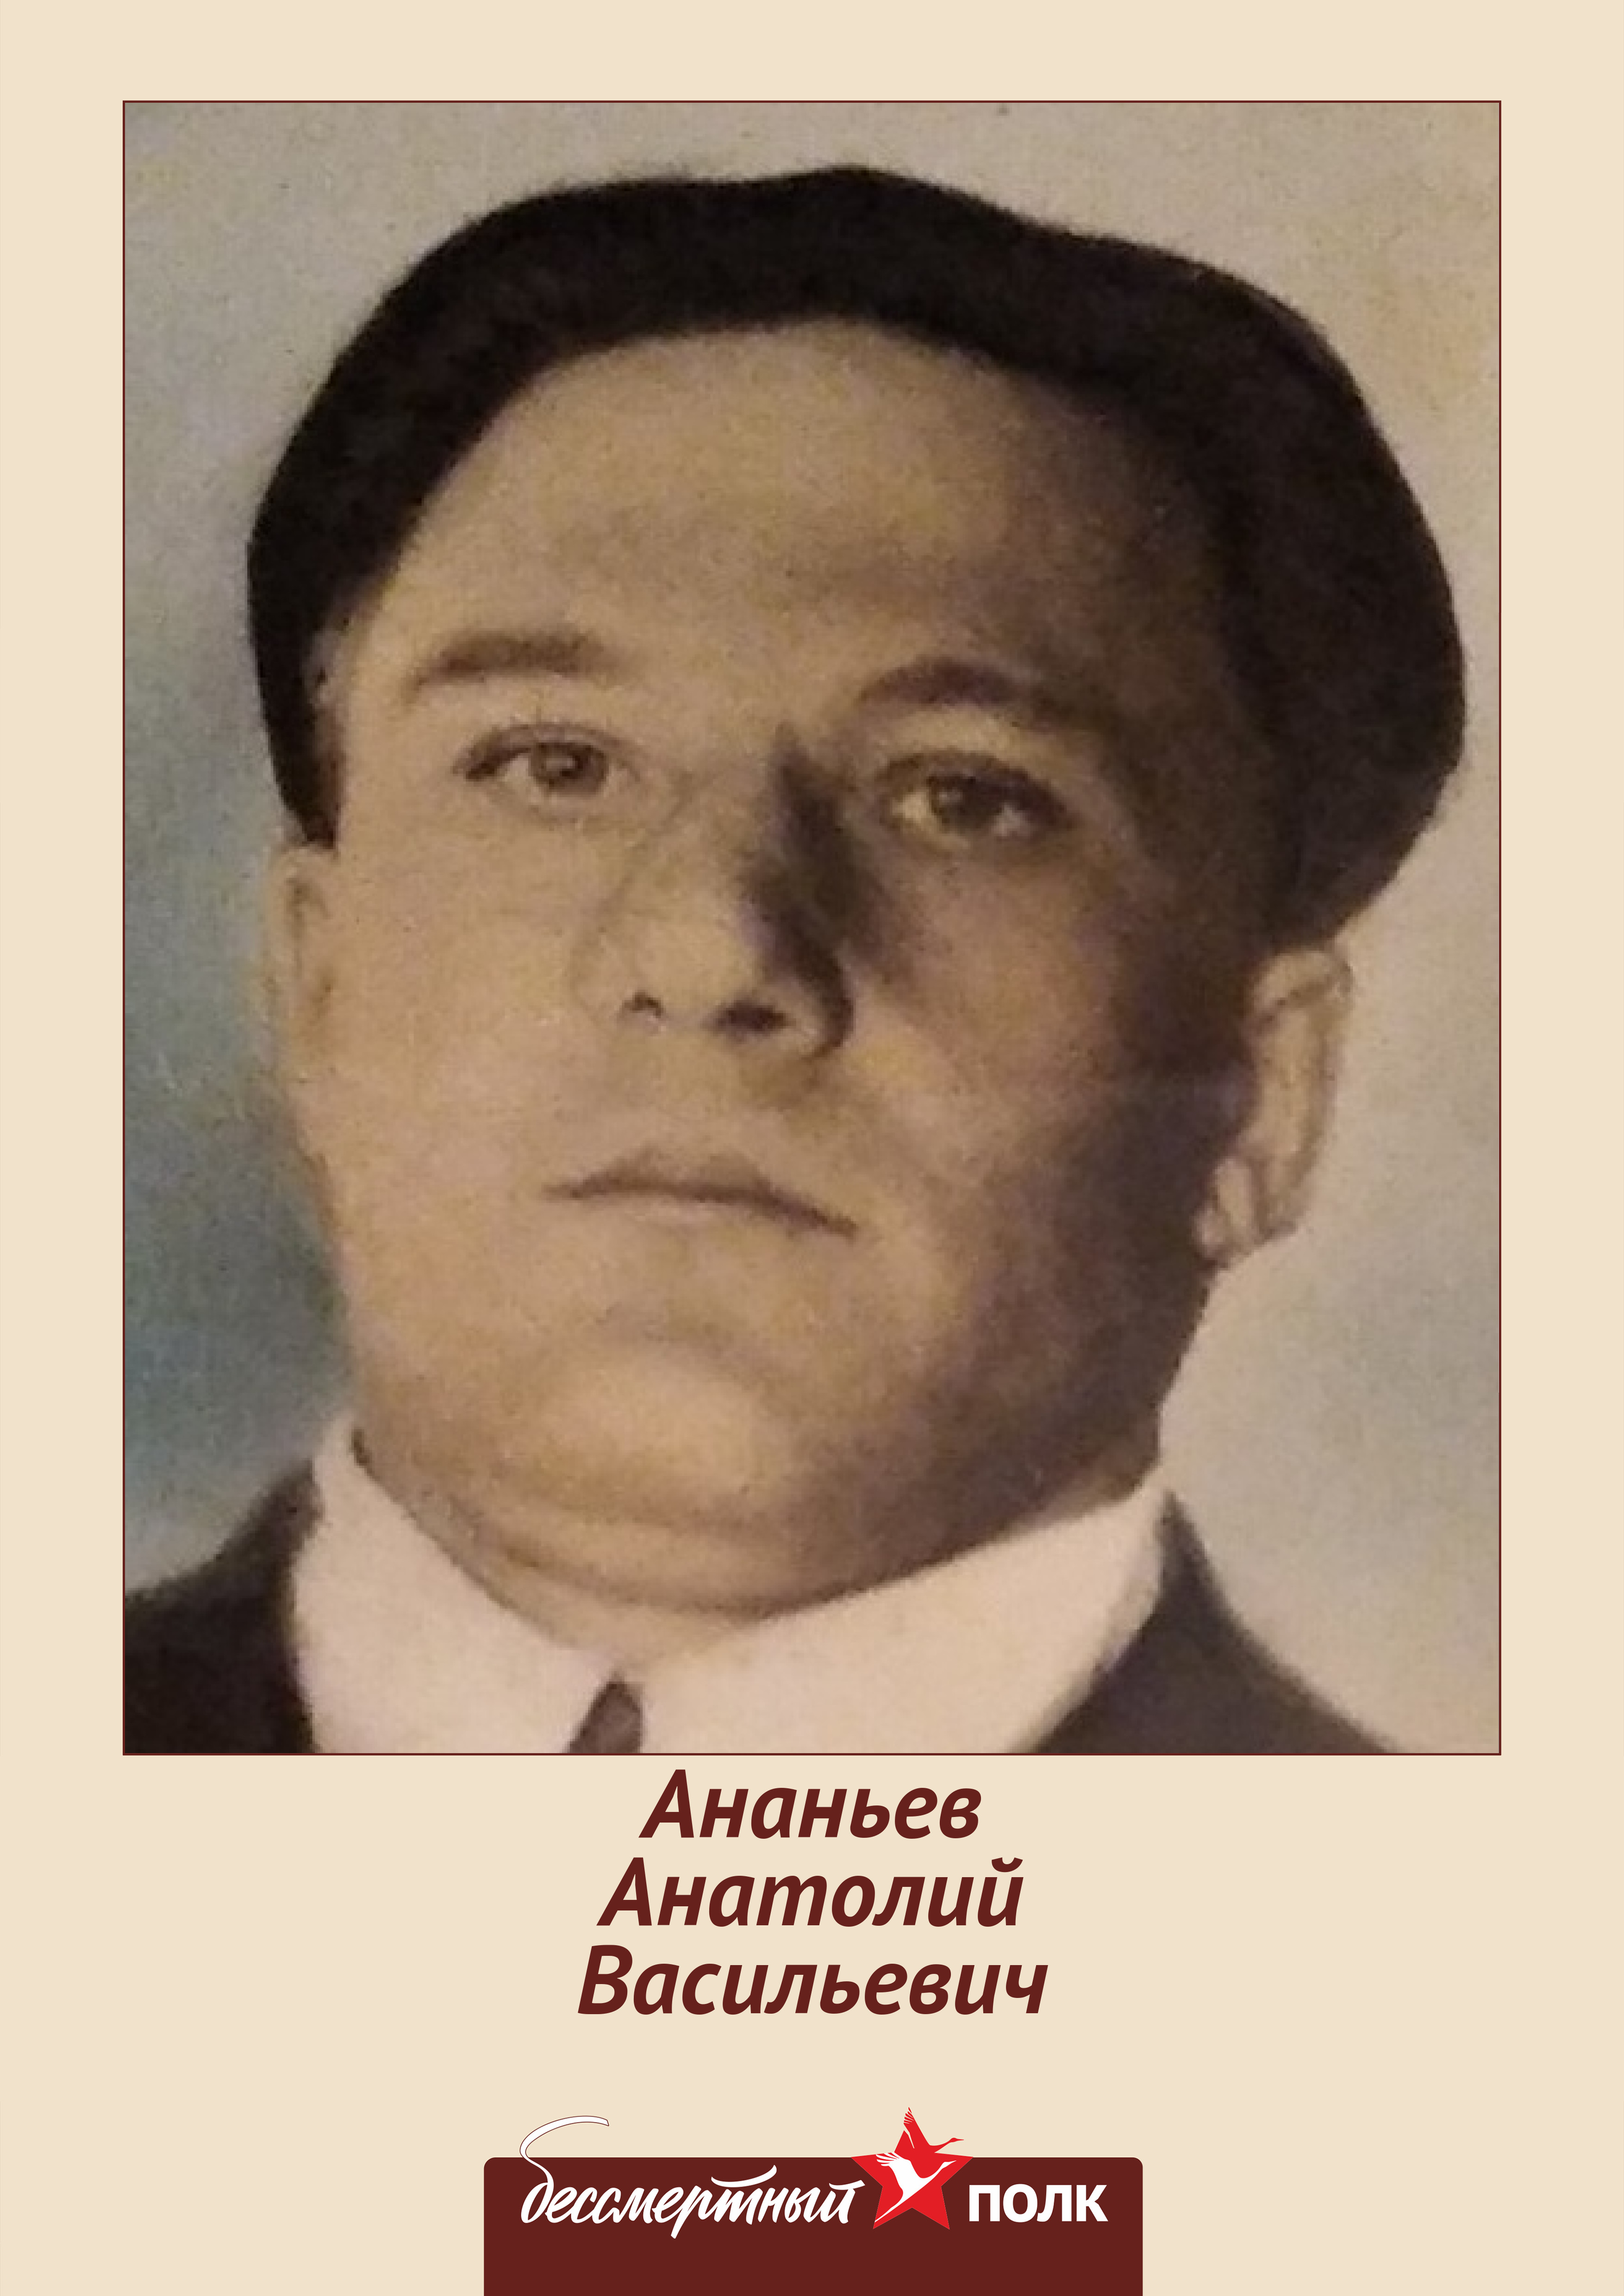 Ананьев Анатолий Васильевич.